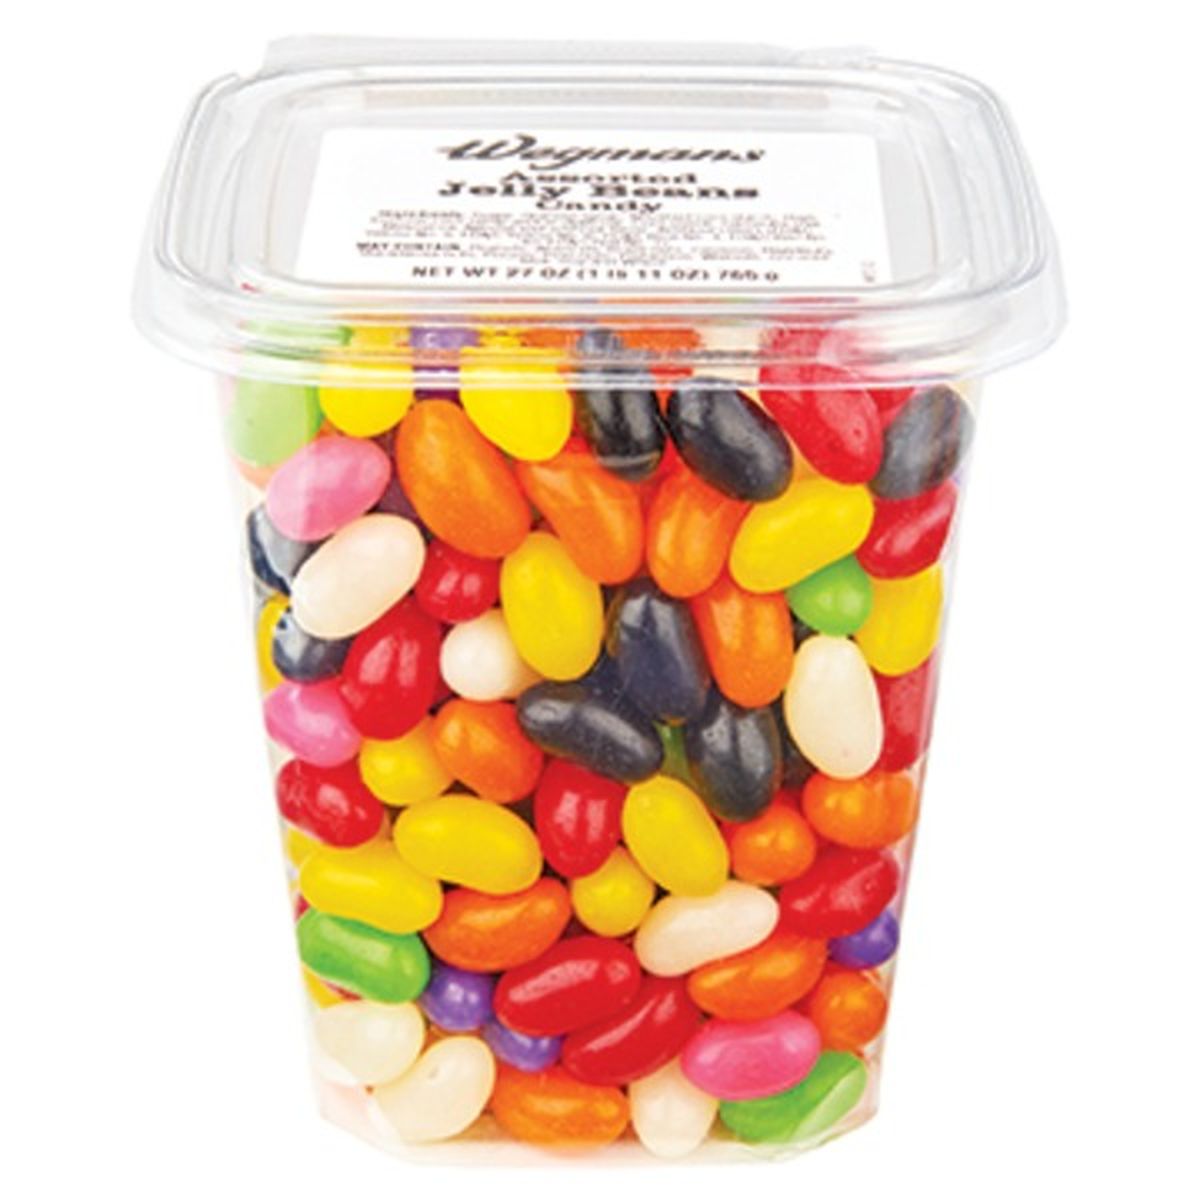 Calories in Wegmans Assorted Jelly Beans